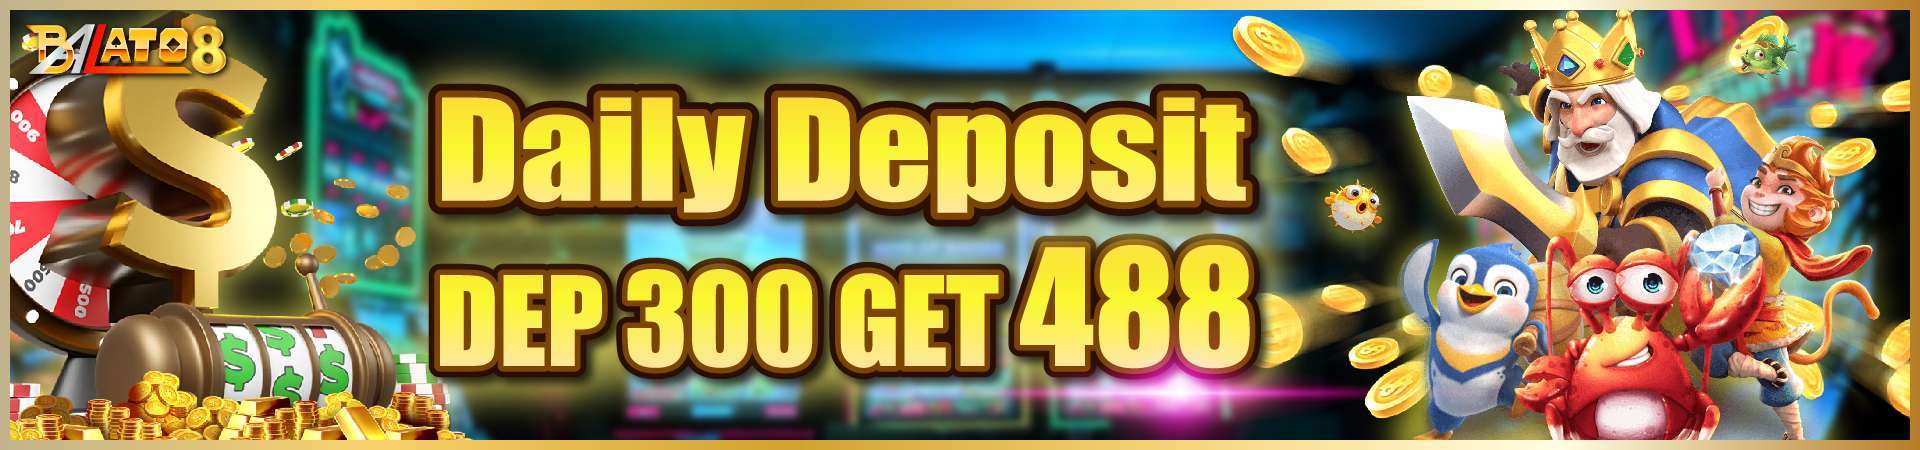 BALATO8 daily deposit bonus